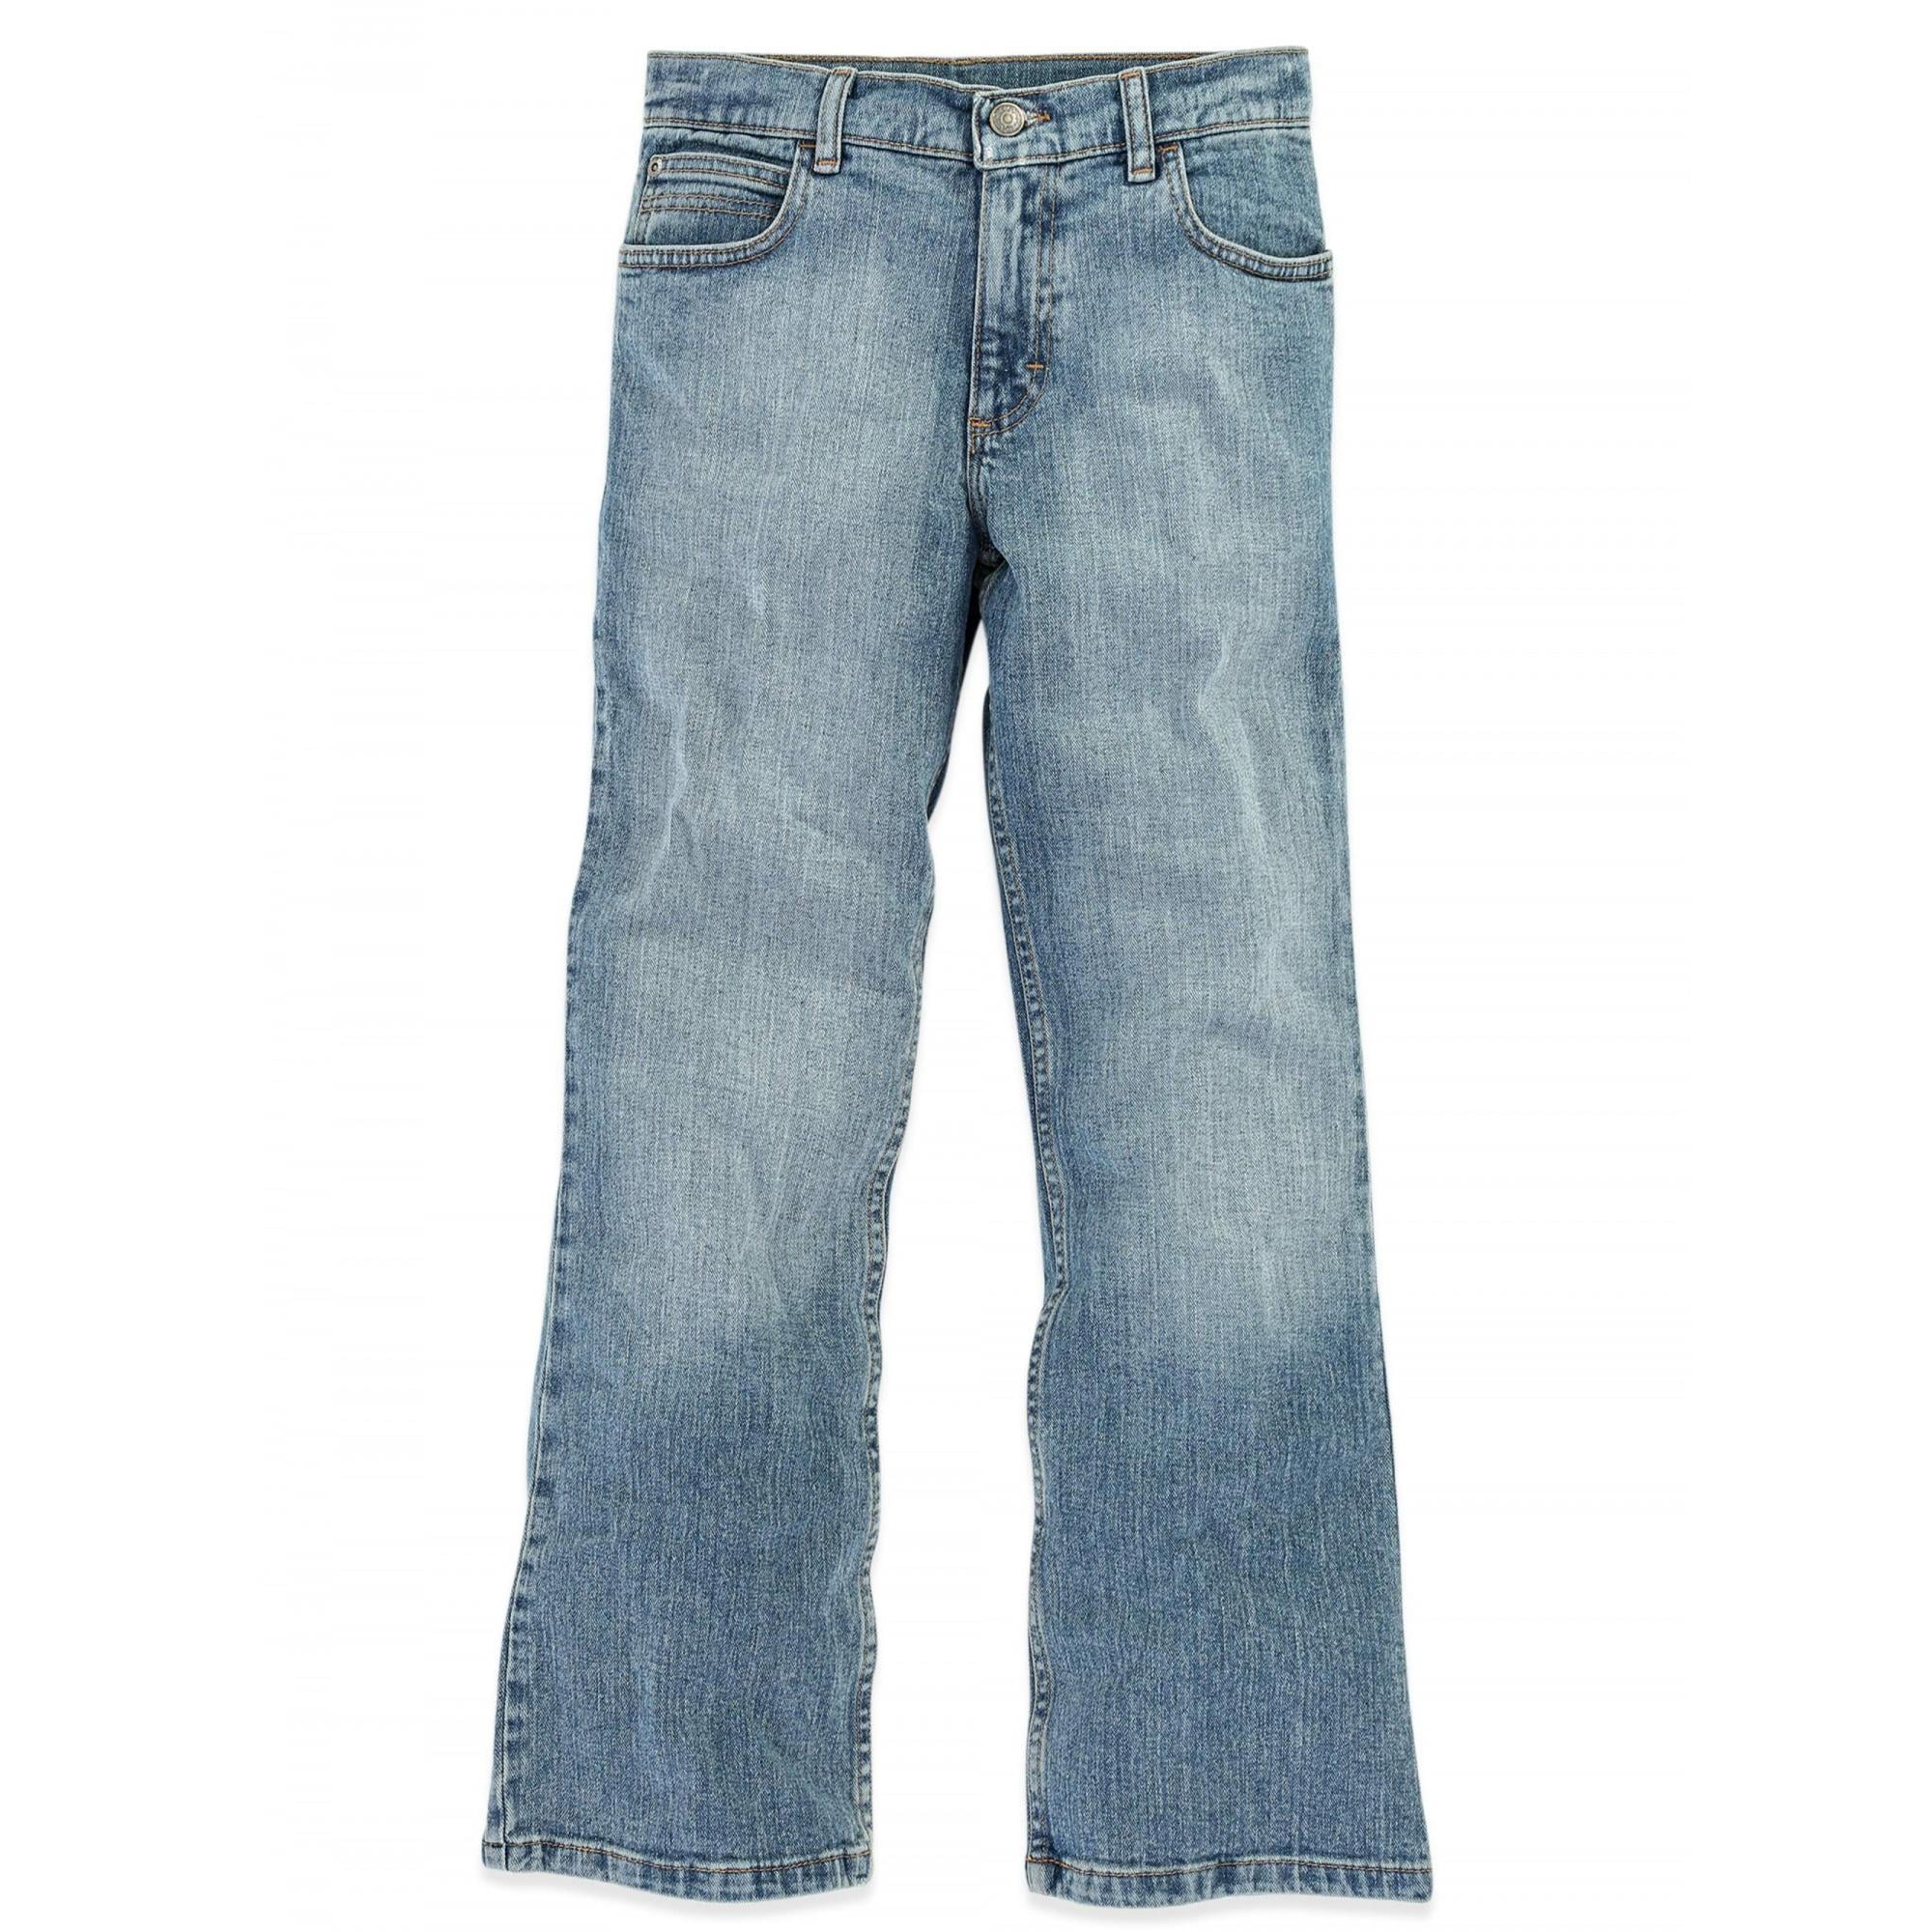 Wrangler Boys Bootcut Denim Jeans Sizes 4 18 Husky d0081a21 55e6 404b 8661 b4d429561e93.b753d7e74f983136c1d4f5ffe53aa9cf